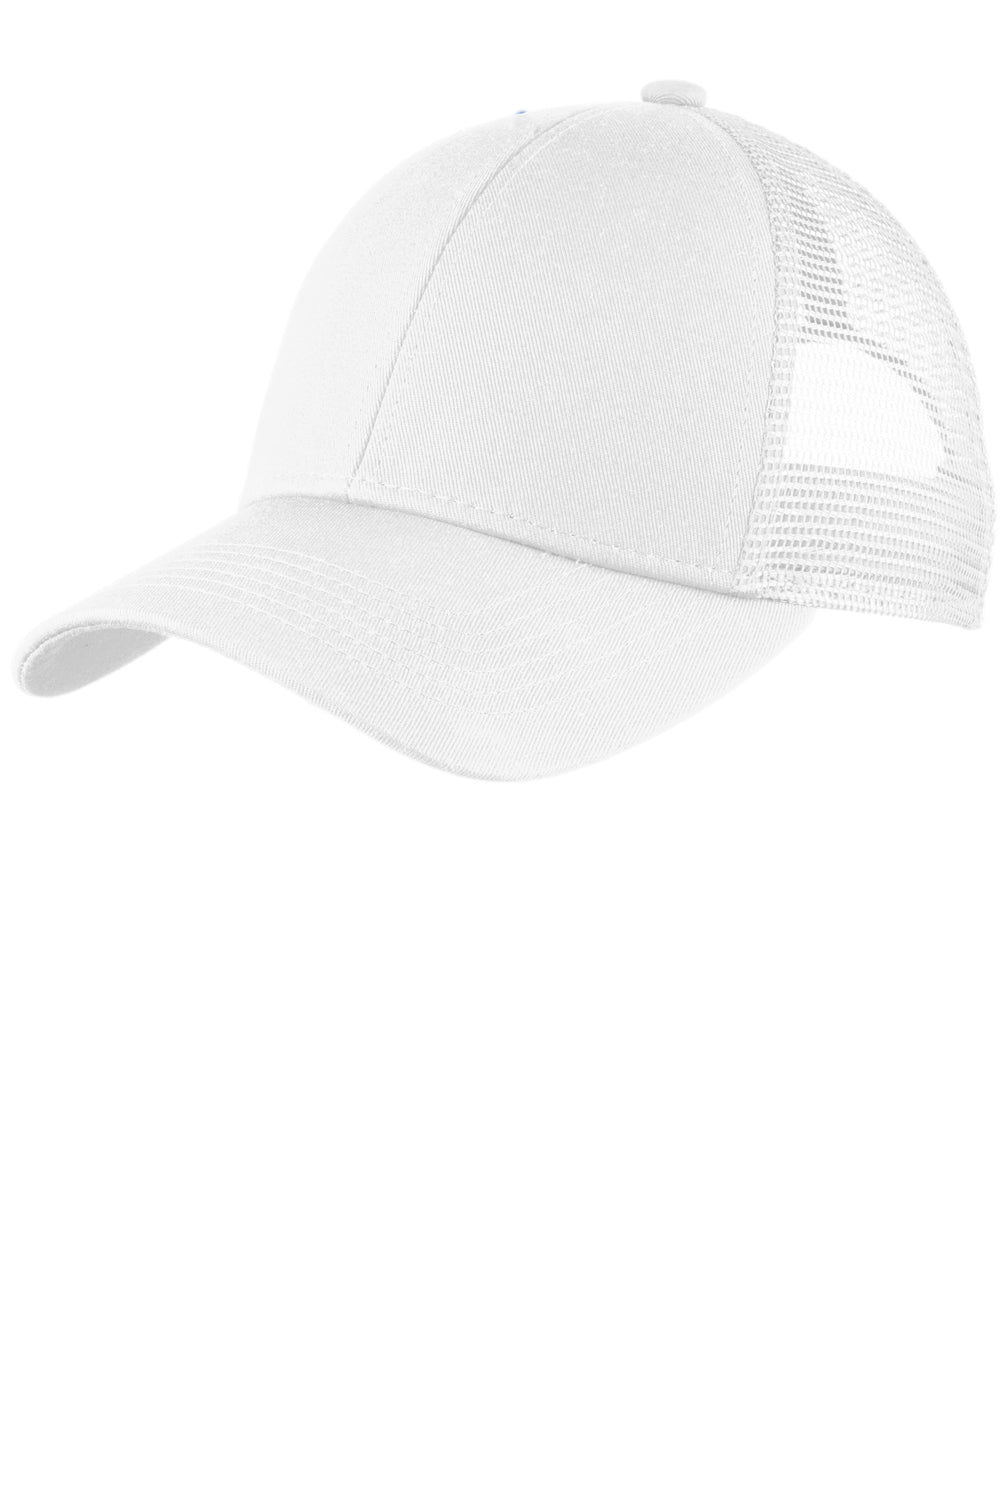 Port Authority C911 Adjustable Mesh Back Hat White Front